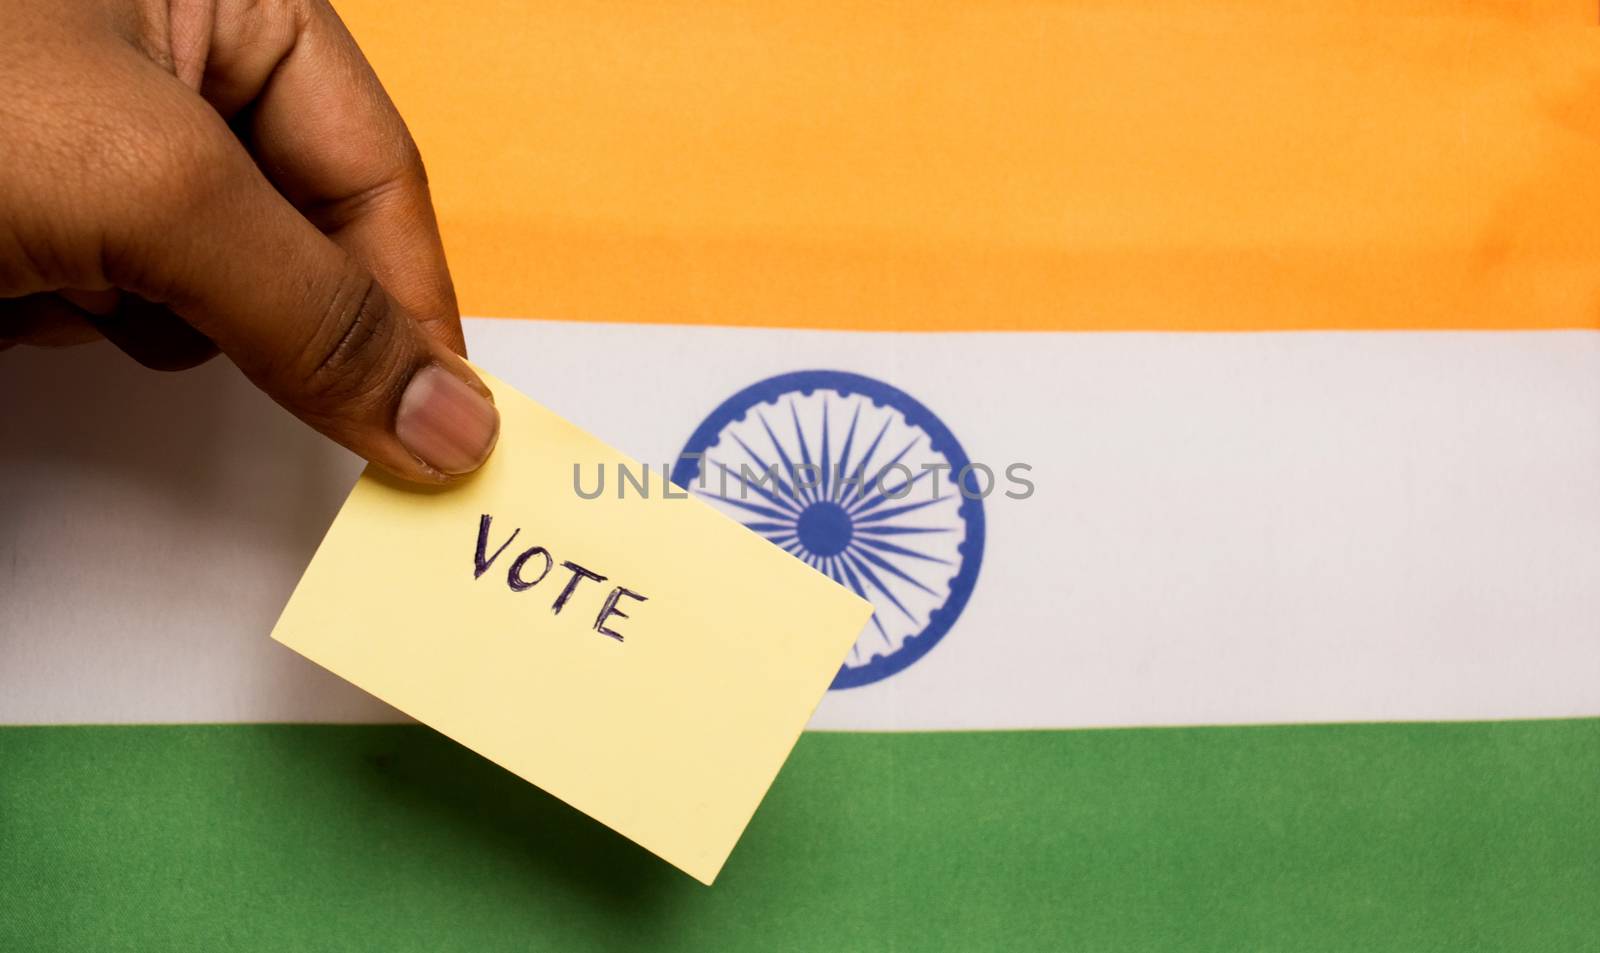 Voting concept - Person holding Hand Written Voting Sticker on India Flag. by lakshmiprasad.maski@gmai.com